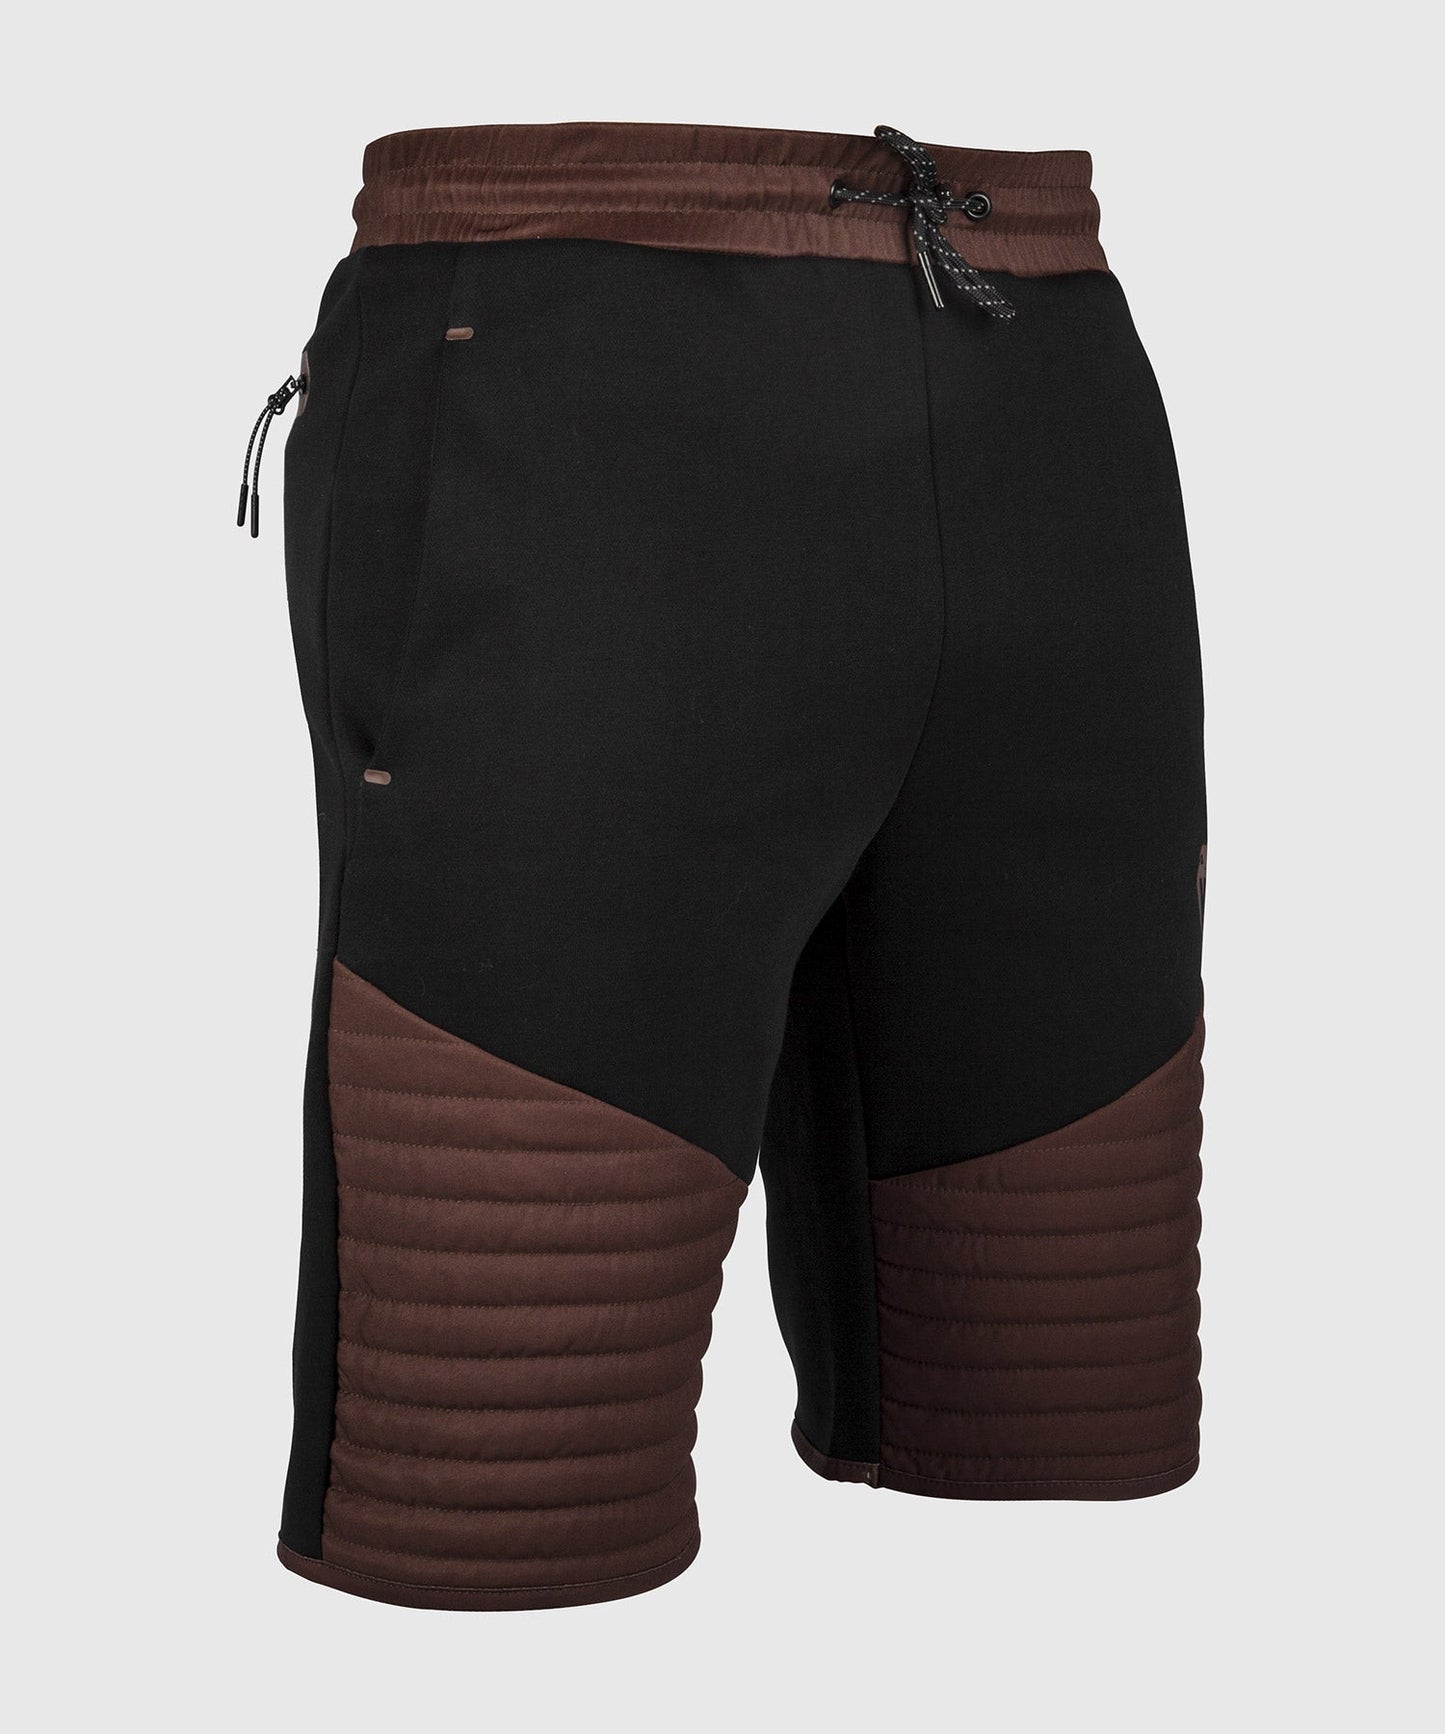 Venum Laser Cotton Shorts - Black/Brown